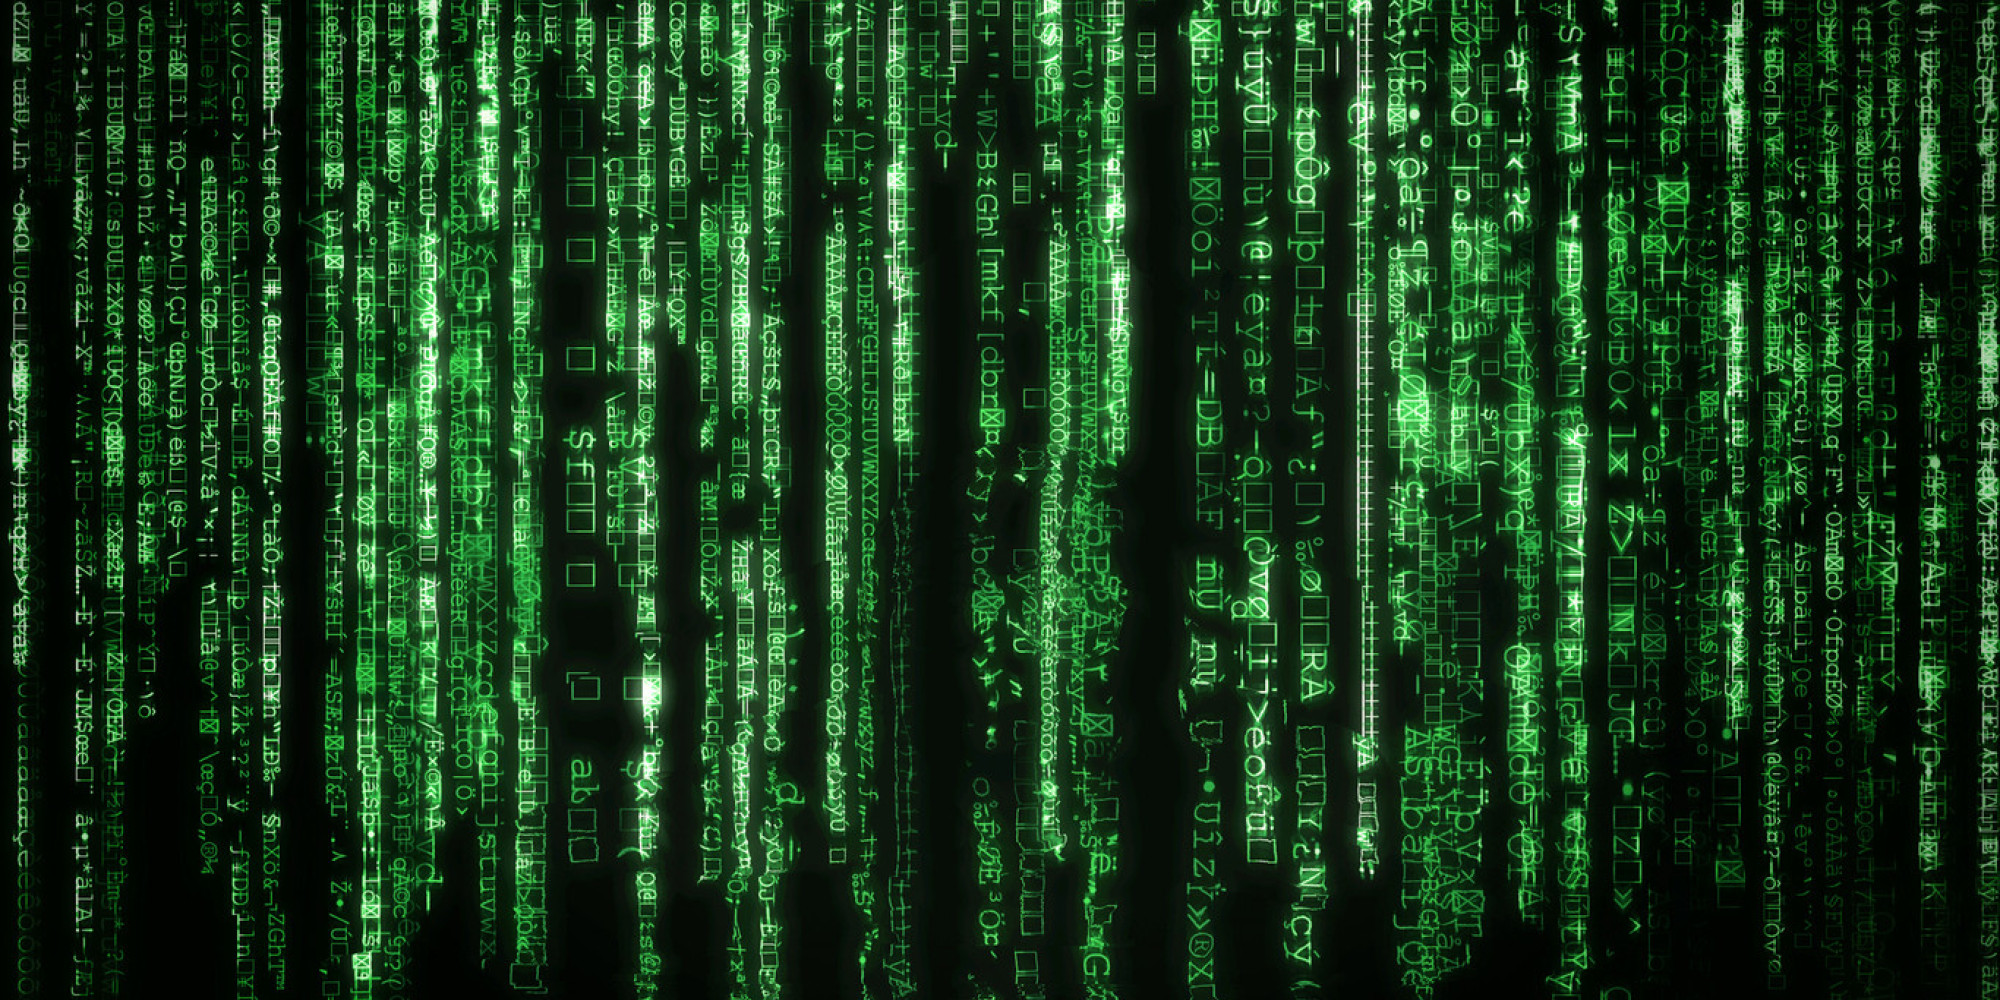 Image result for the matrix